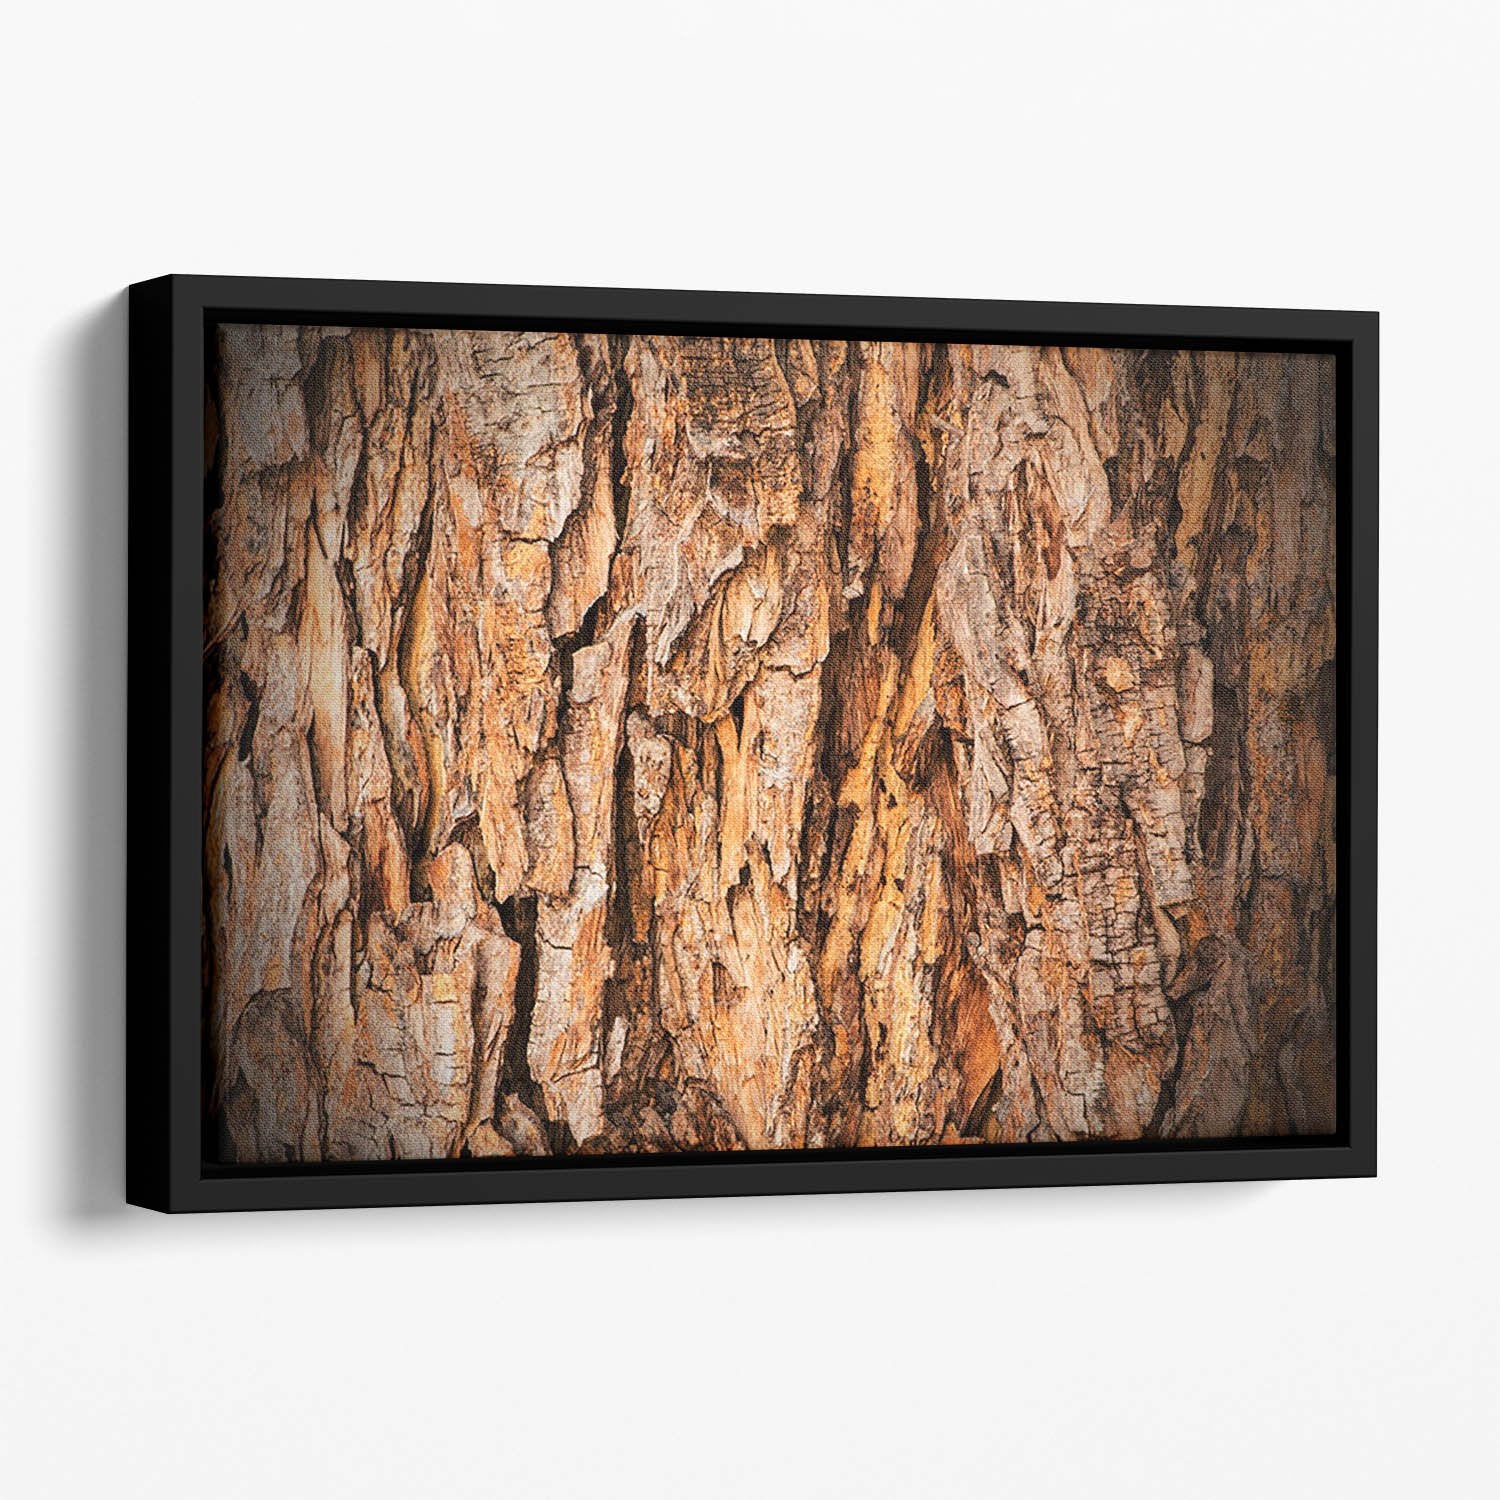 Bark texture Floating Framed Canvas